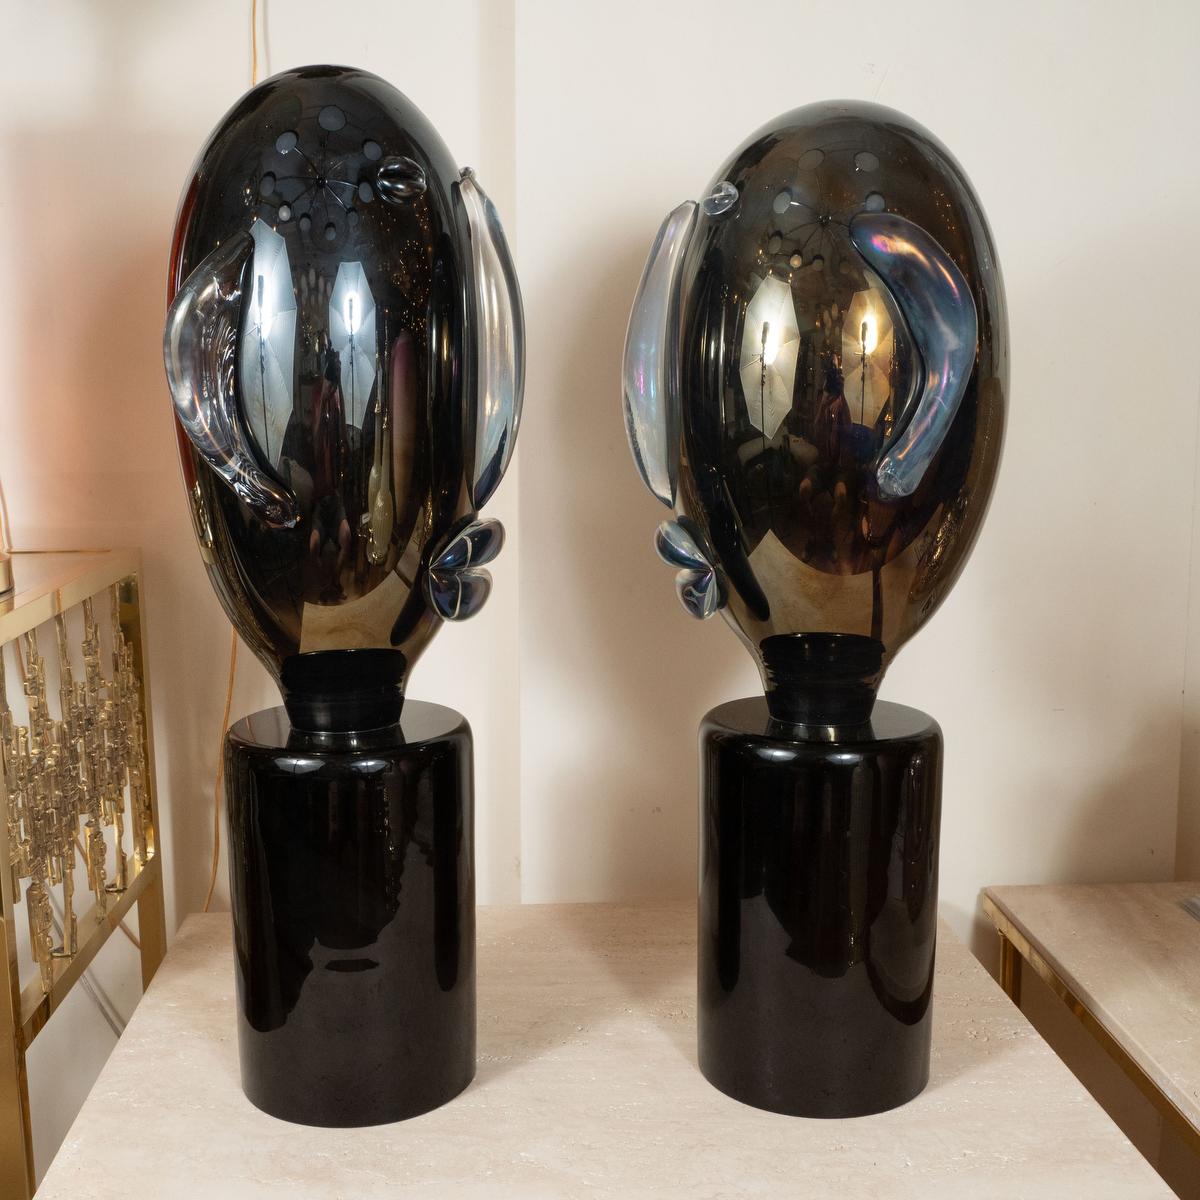 Pair of smoky glass head sculptures.